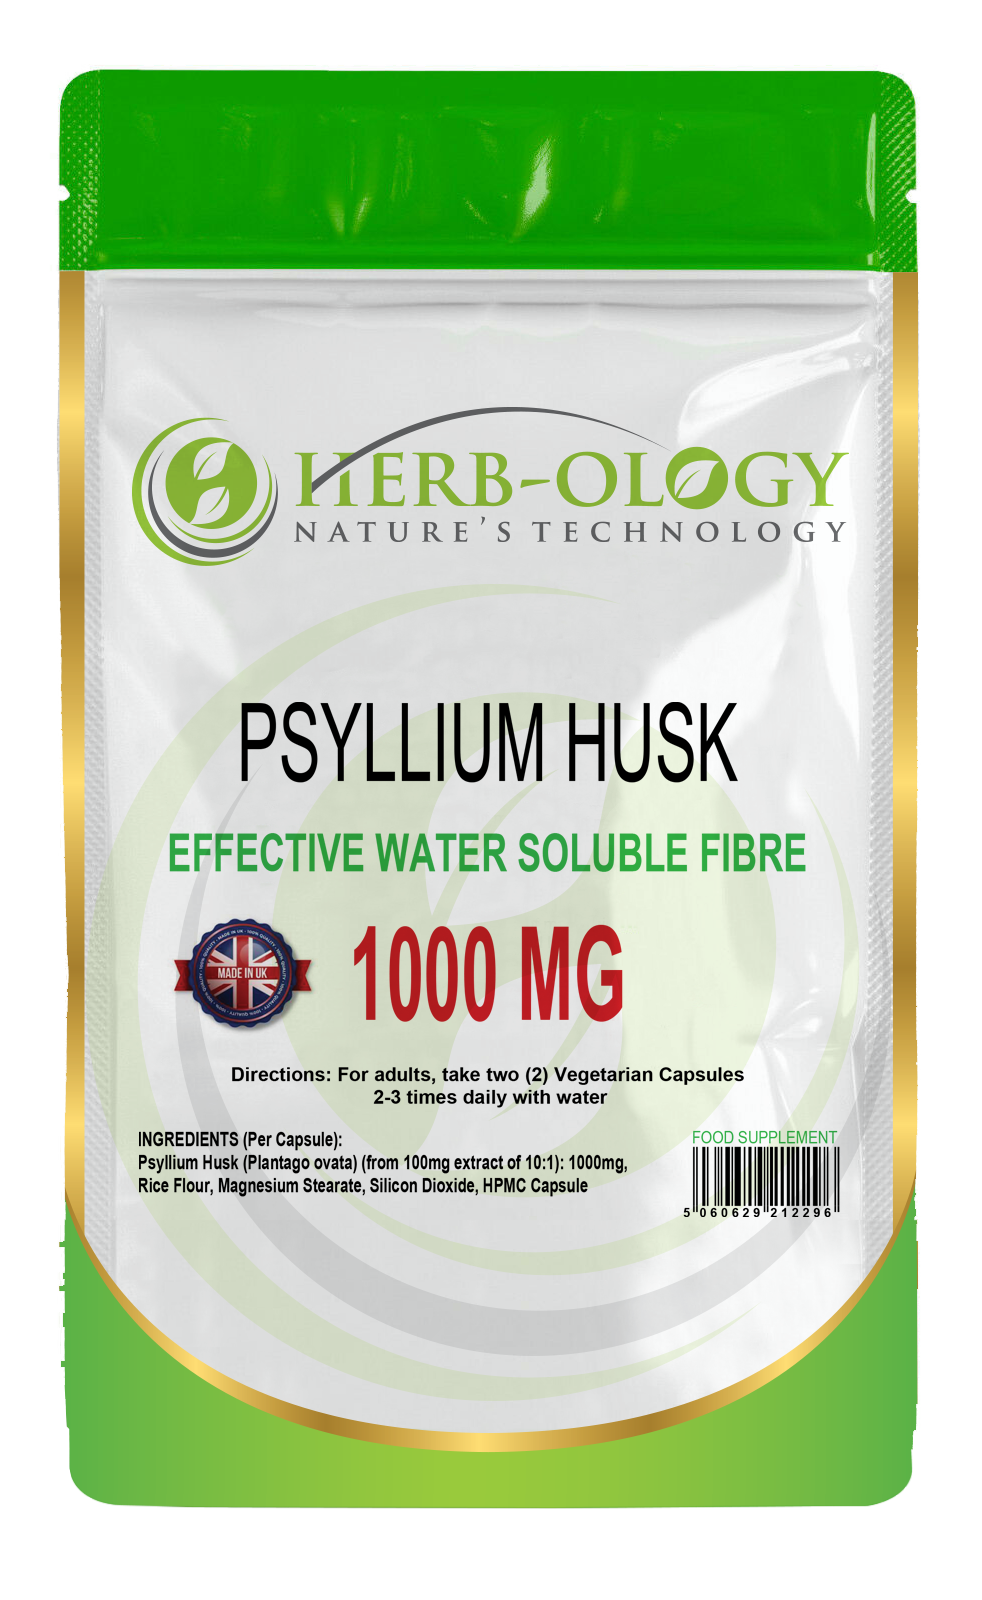 Psyllium Husk Capsules Soluble Fibre Tablets 1000mg Extract Fiber Supplement